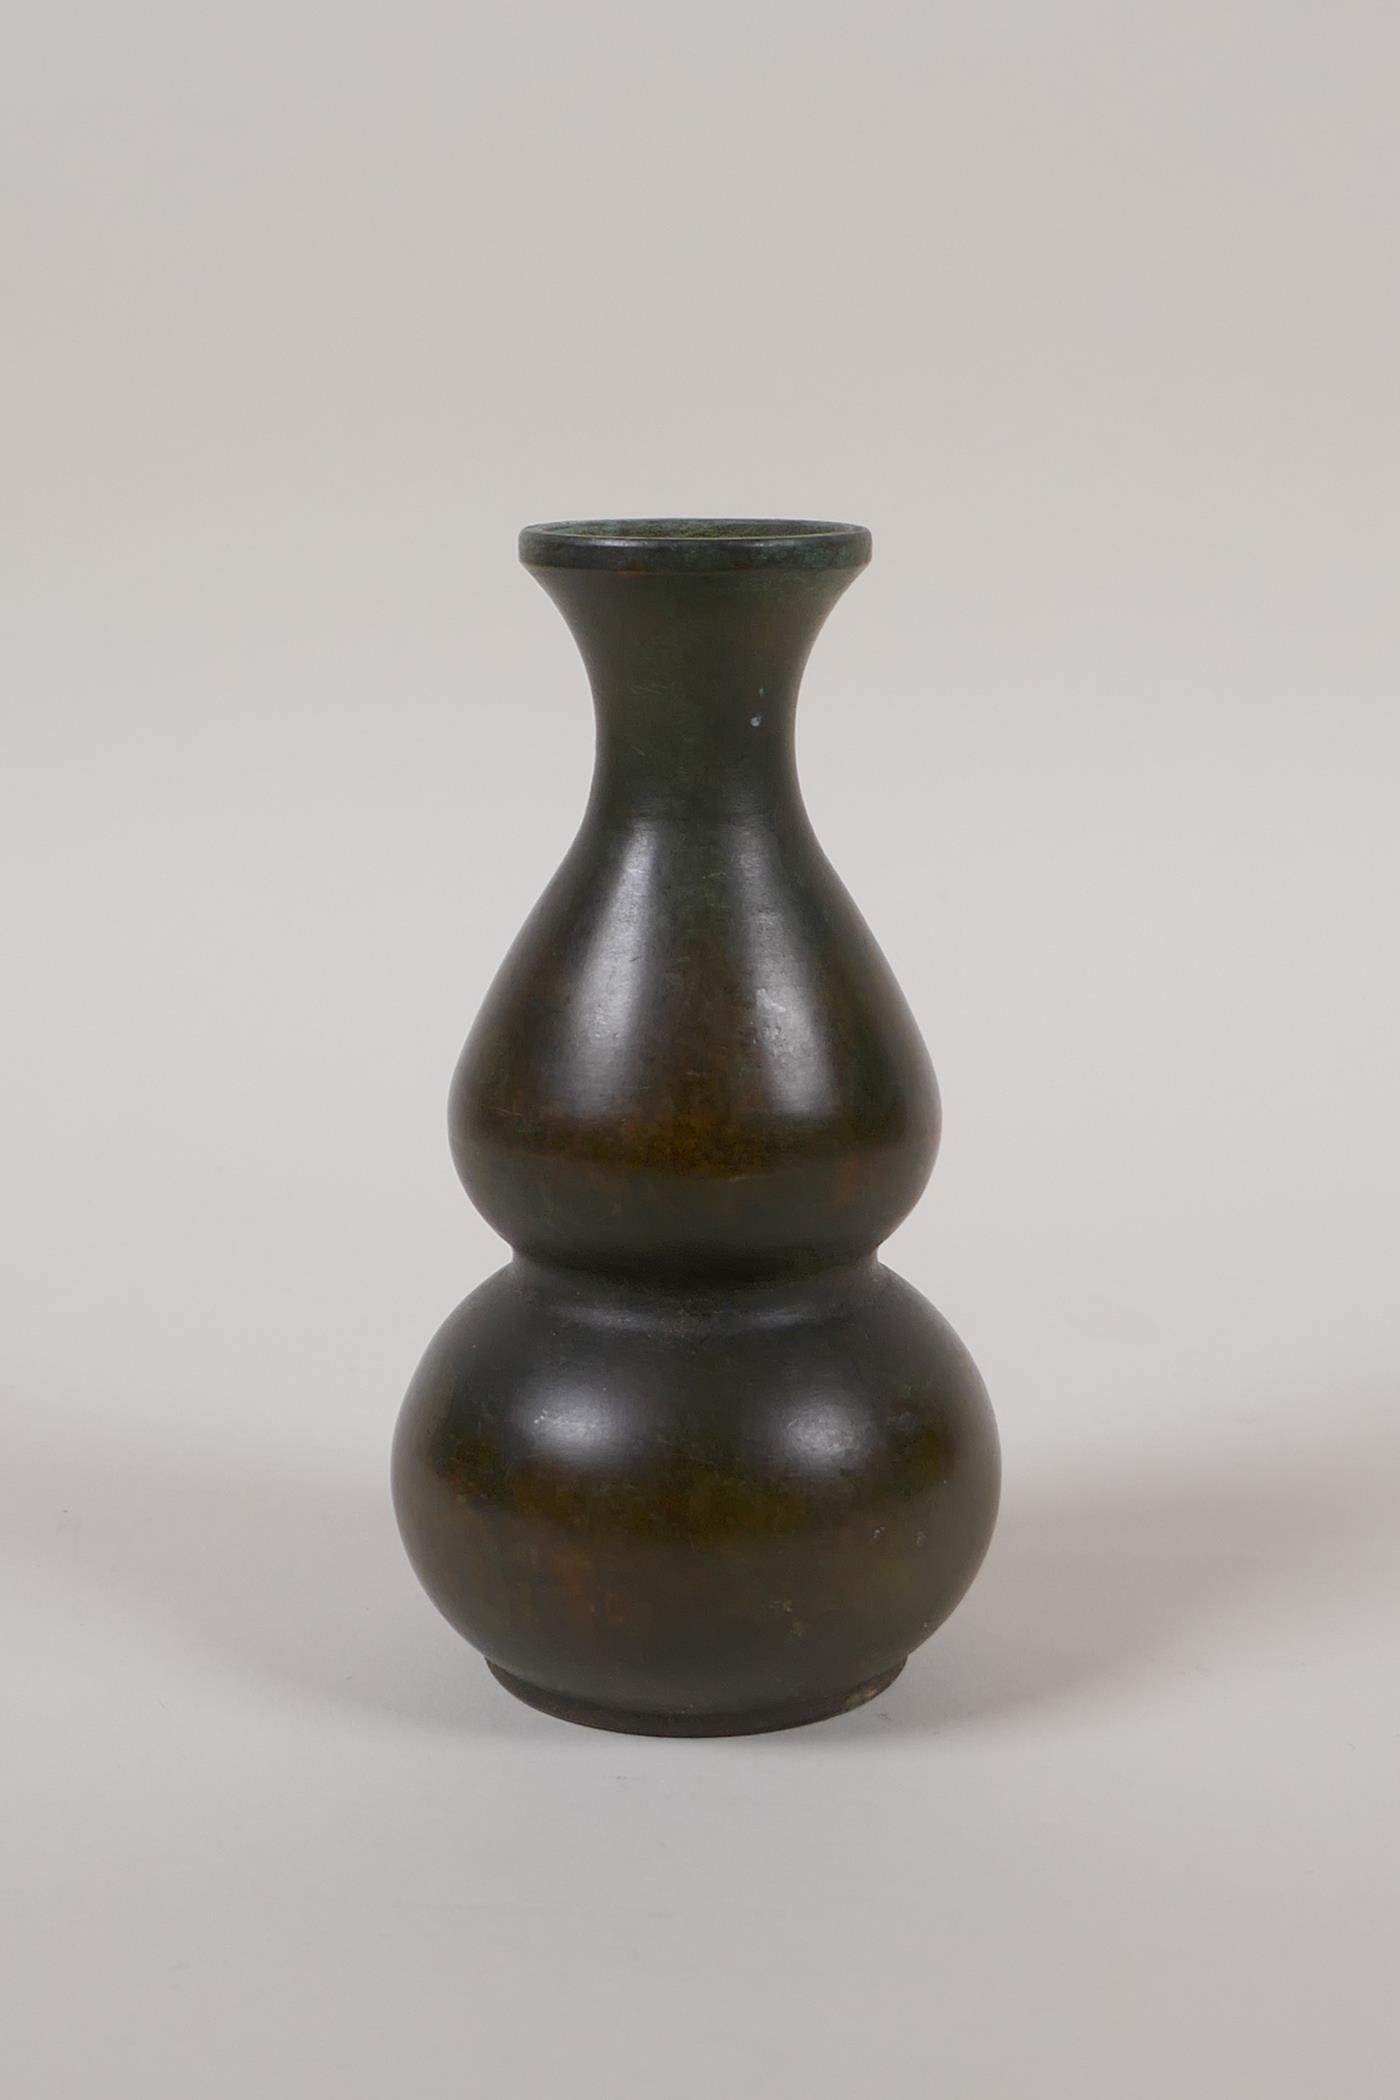 A Chinese bronze double gourd vase, impressed Yin Yang symbol to base, 5" high - Image 7 of 14